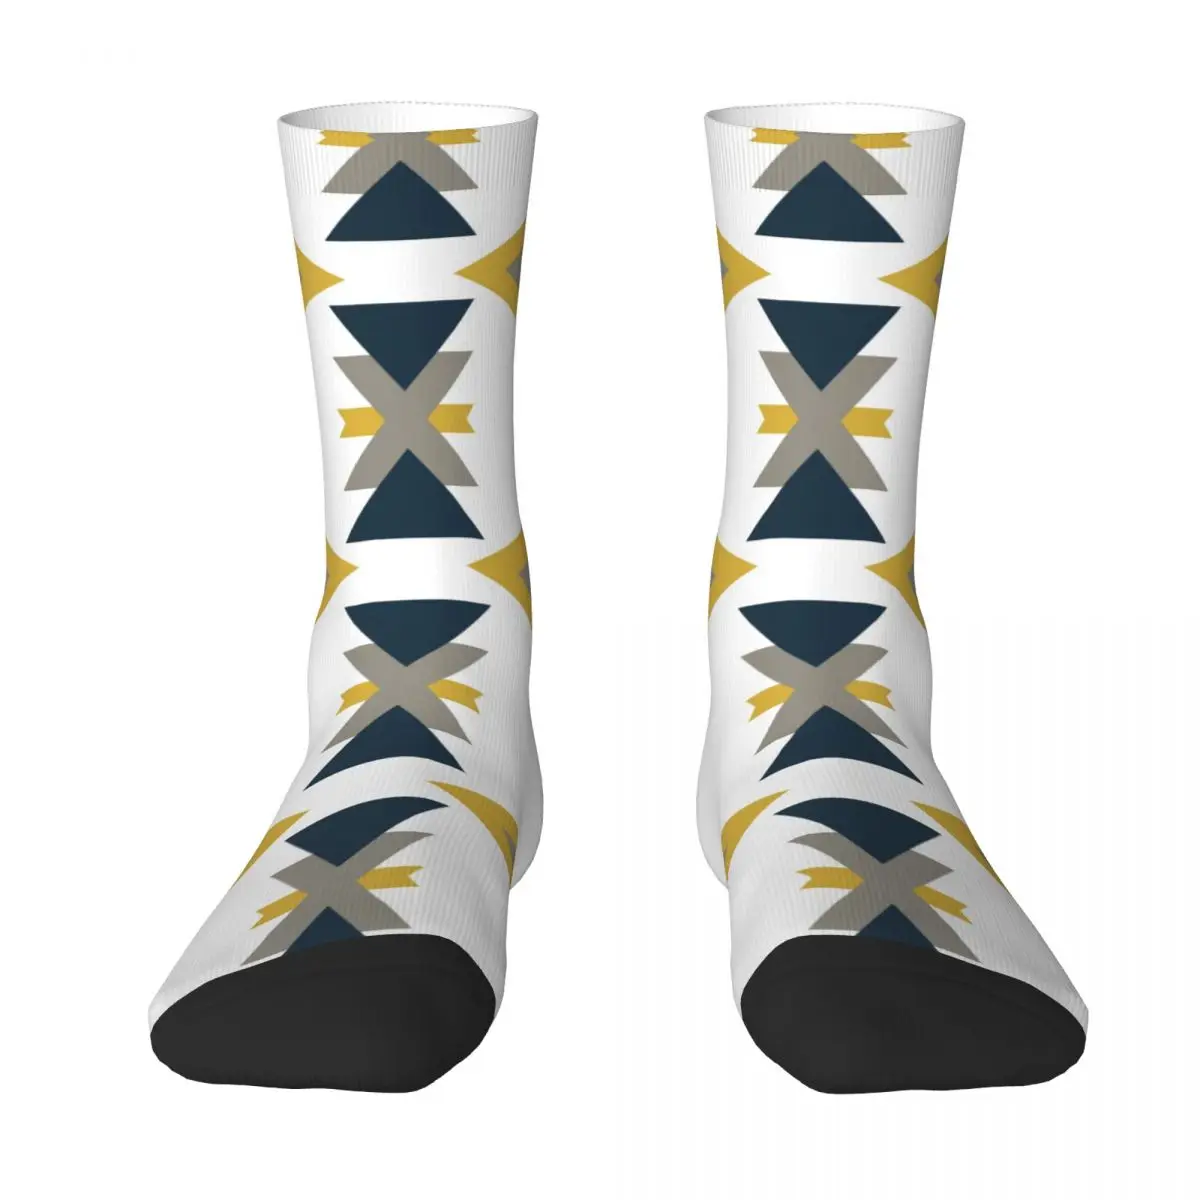 Southwest Triangle. Minimalist Geometric Abstract Arrow Design Socks Super Soft Stockings All Season Long Socks for Unisex Gifts